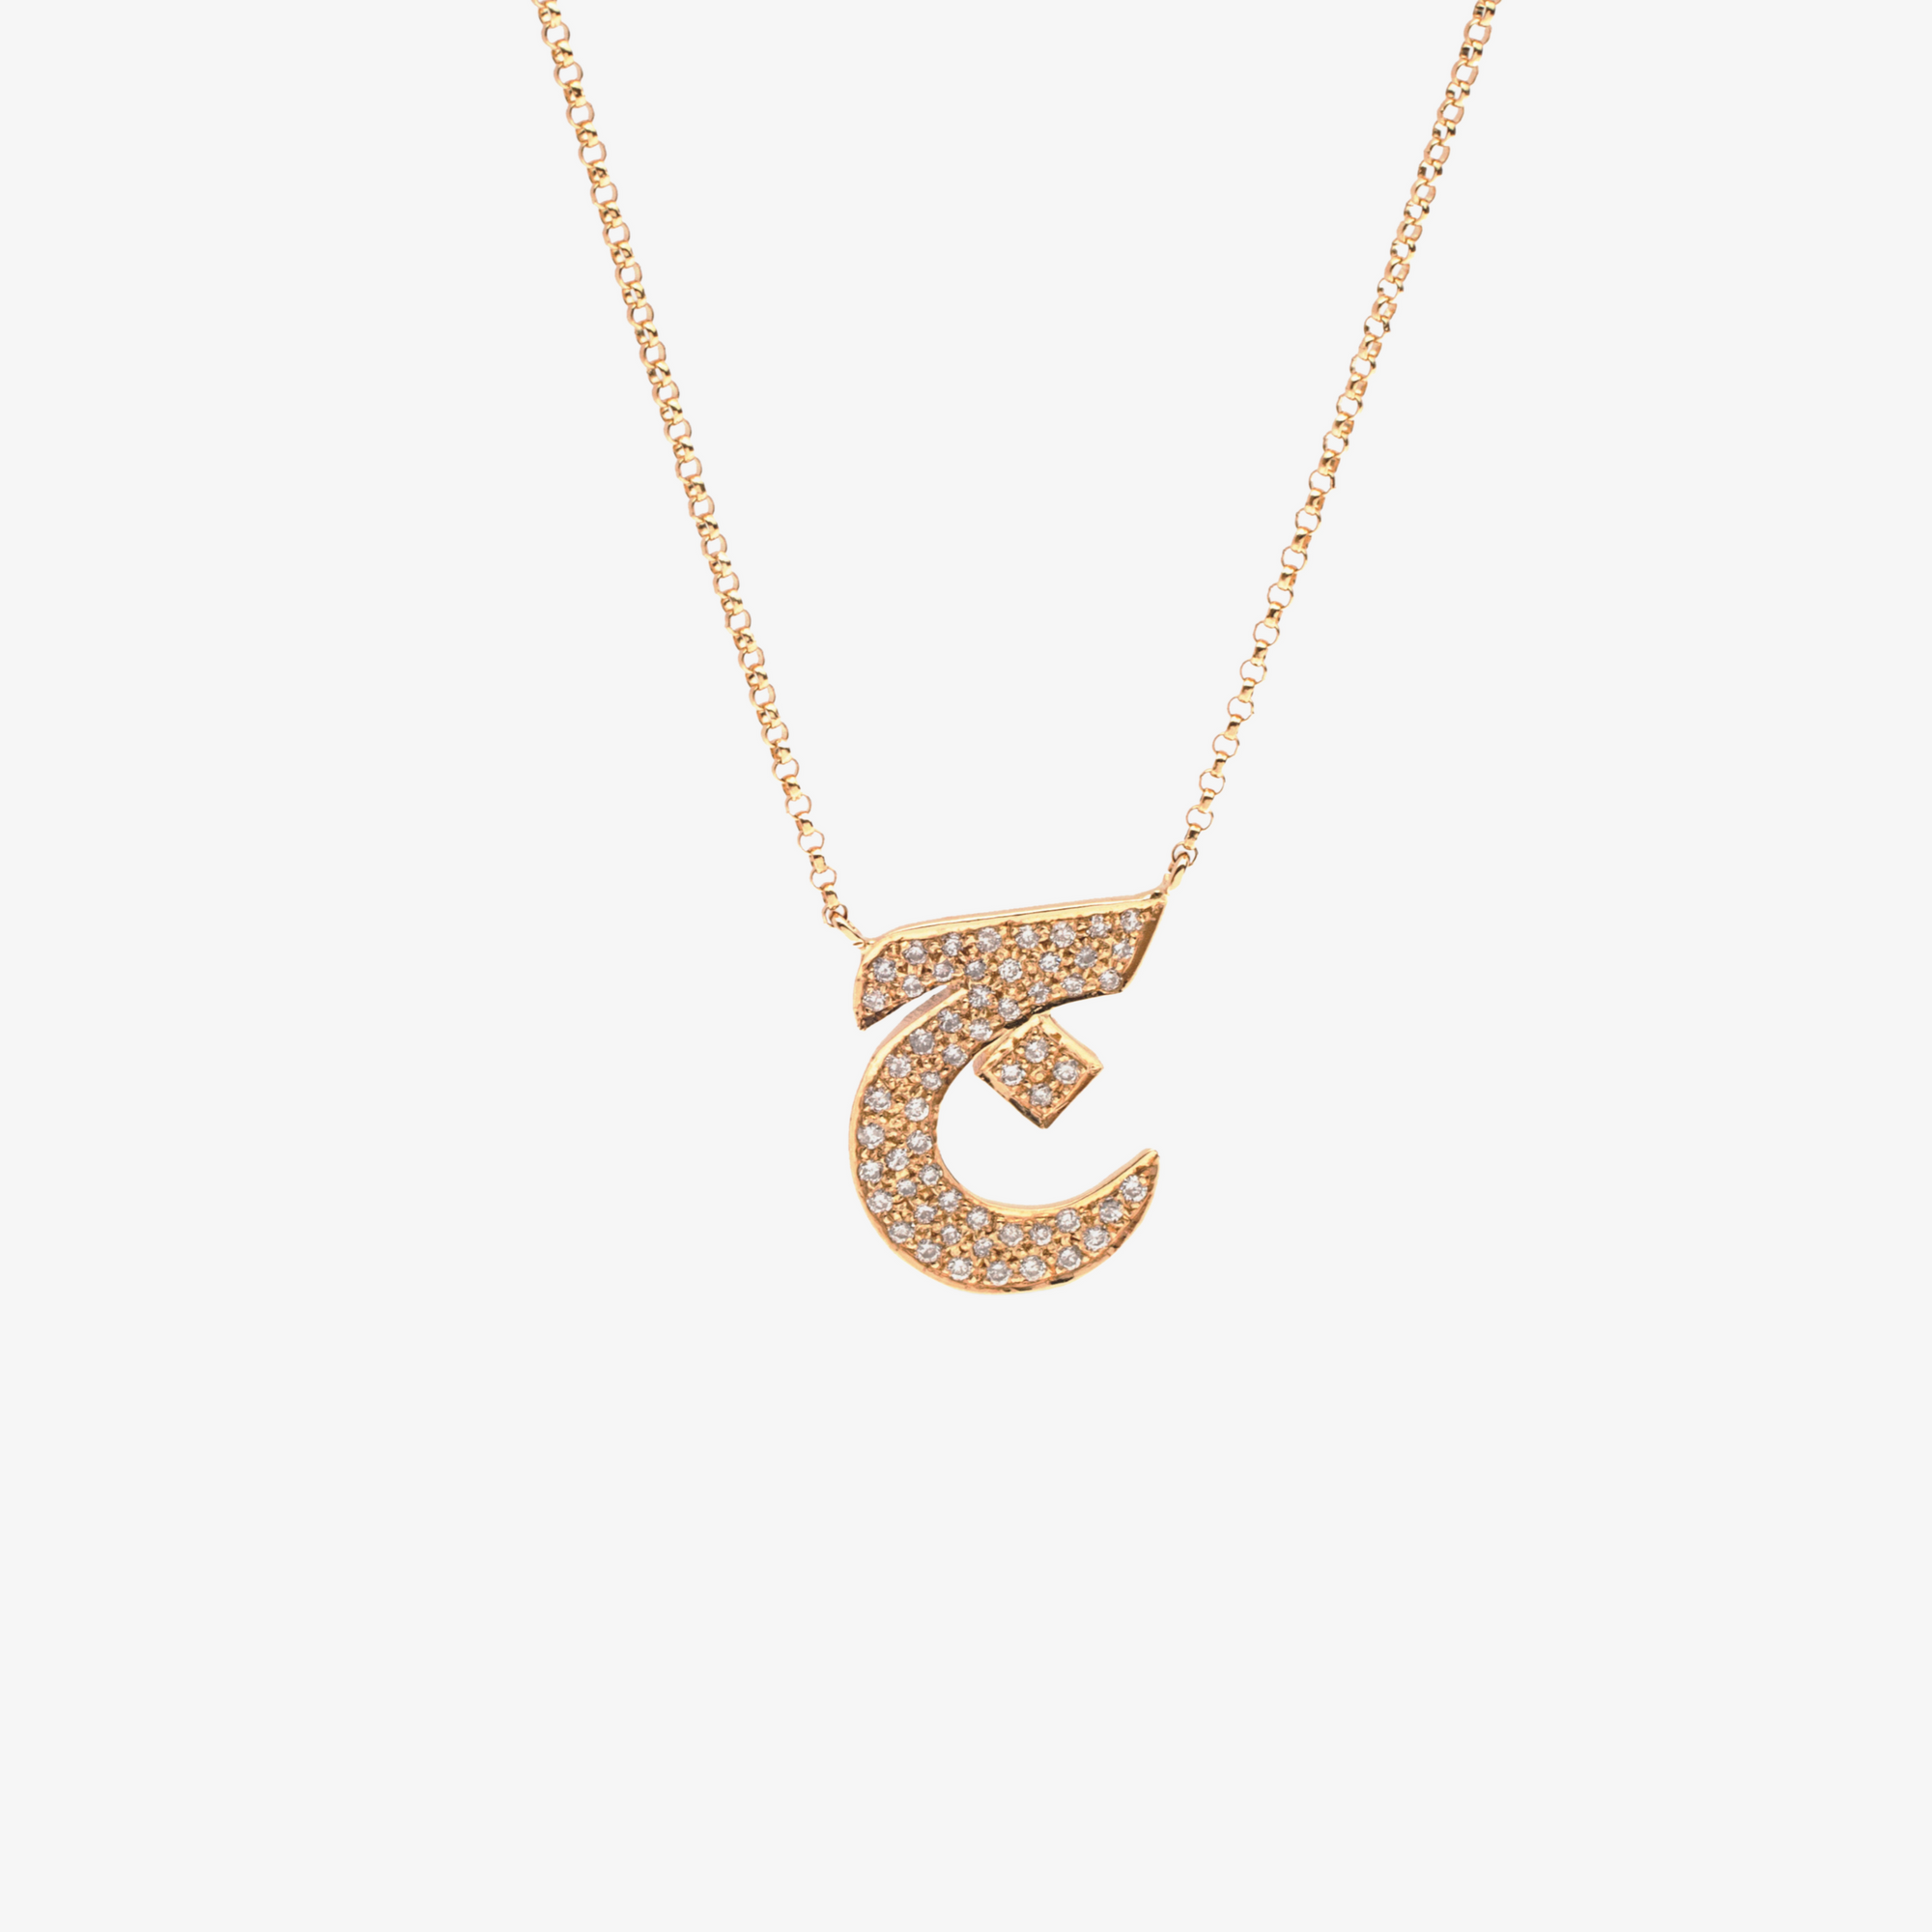 OULA - 18K Gold & Diamond Letter Necklace. Small Size